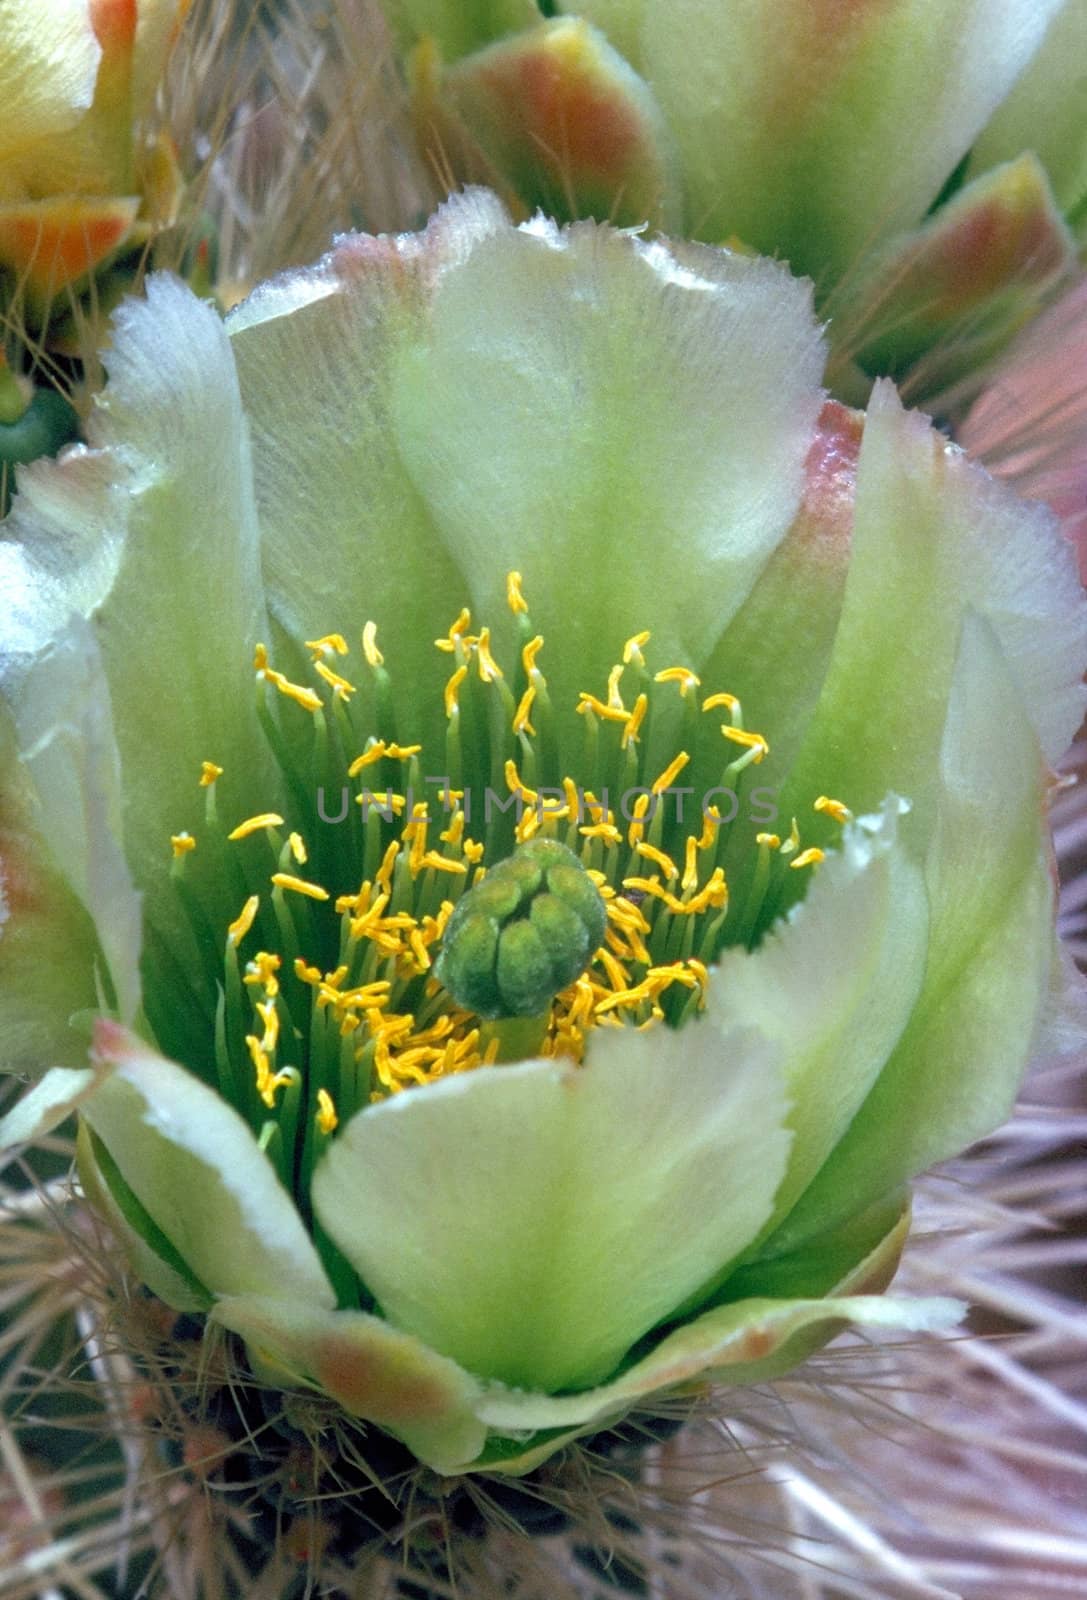 Cactus flower by jol66